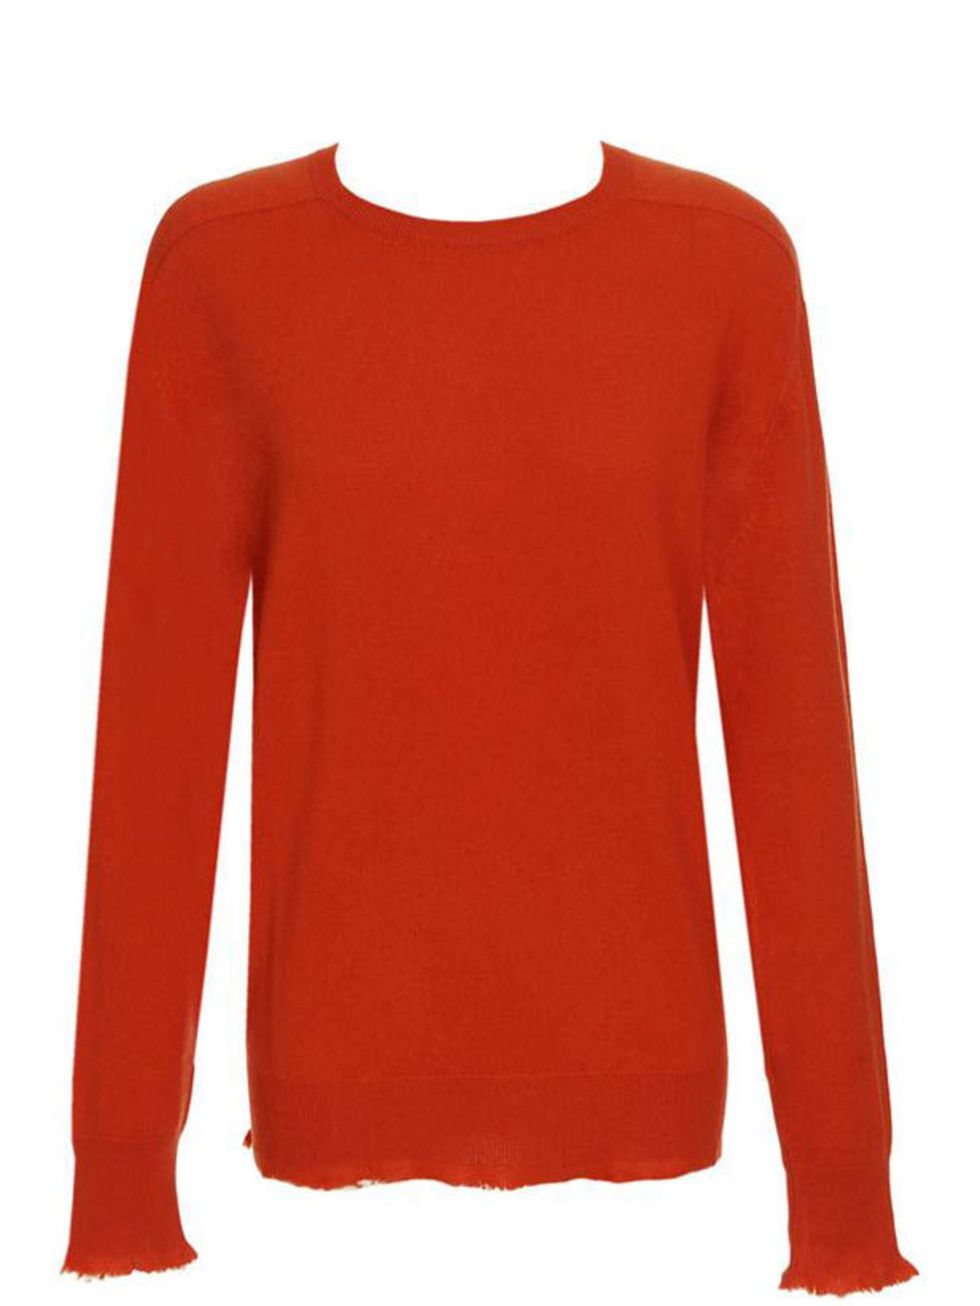 <p>Bottega Veneta raw edge sweater, £805, at <a href="http://www.brownsfashion.com/Product/Women/Women/Clothing/Knitwear/Cashmere_jumper/Product.aspx?p=3146967&amp;pc=1949756&amp;cl=4">Browns Fashion</a></p>